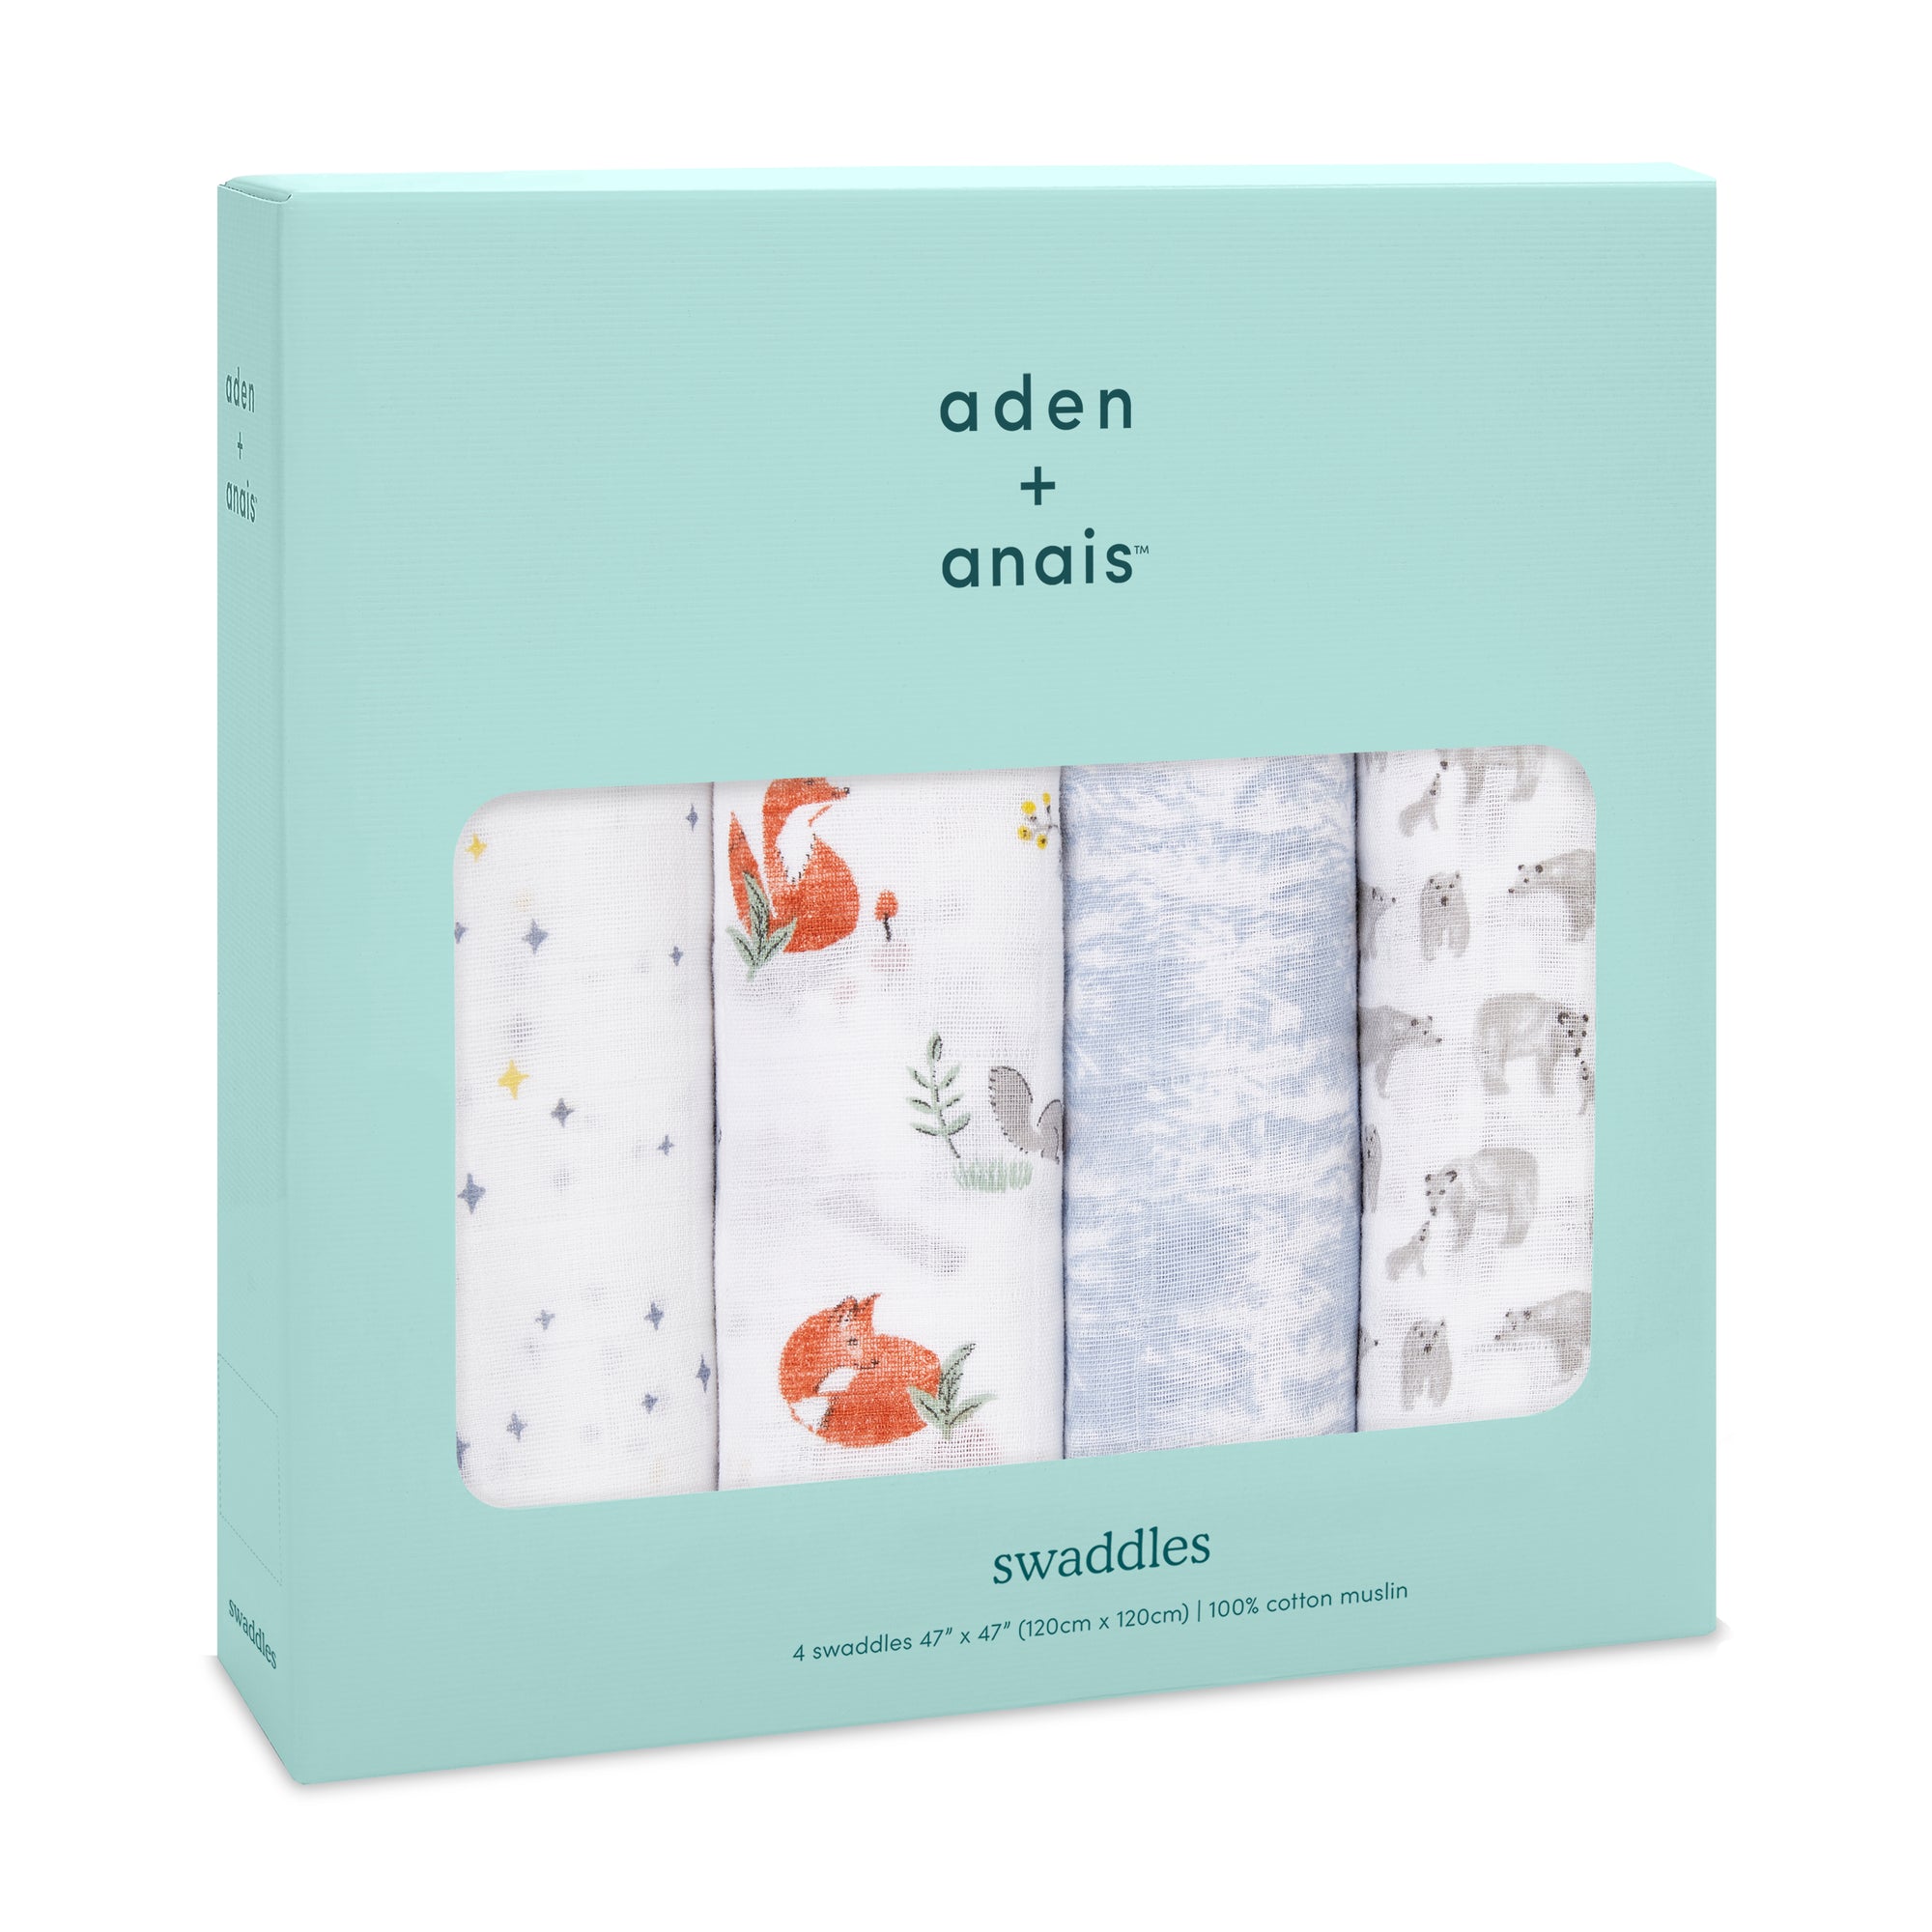 aden + anais naturally 4-pack muslin swaddles